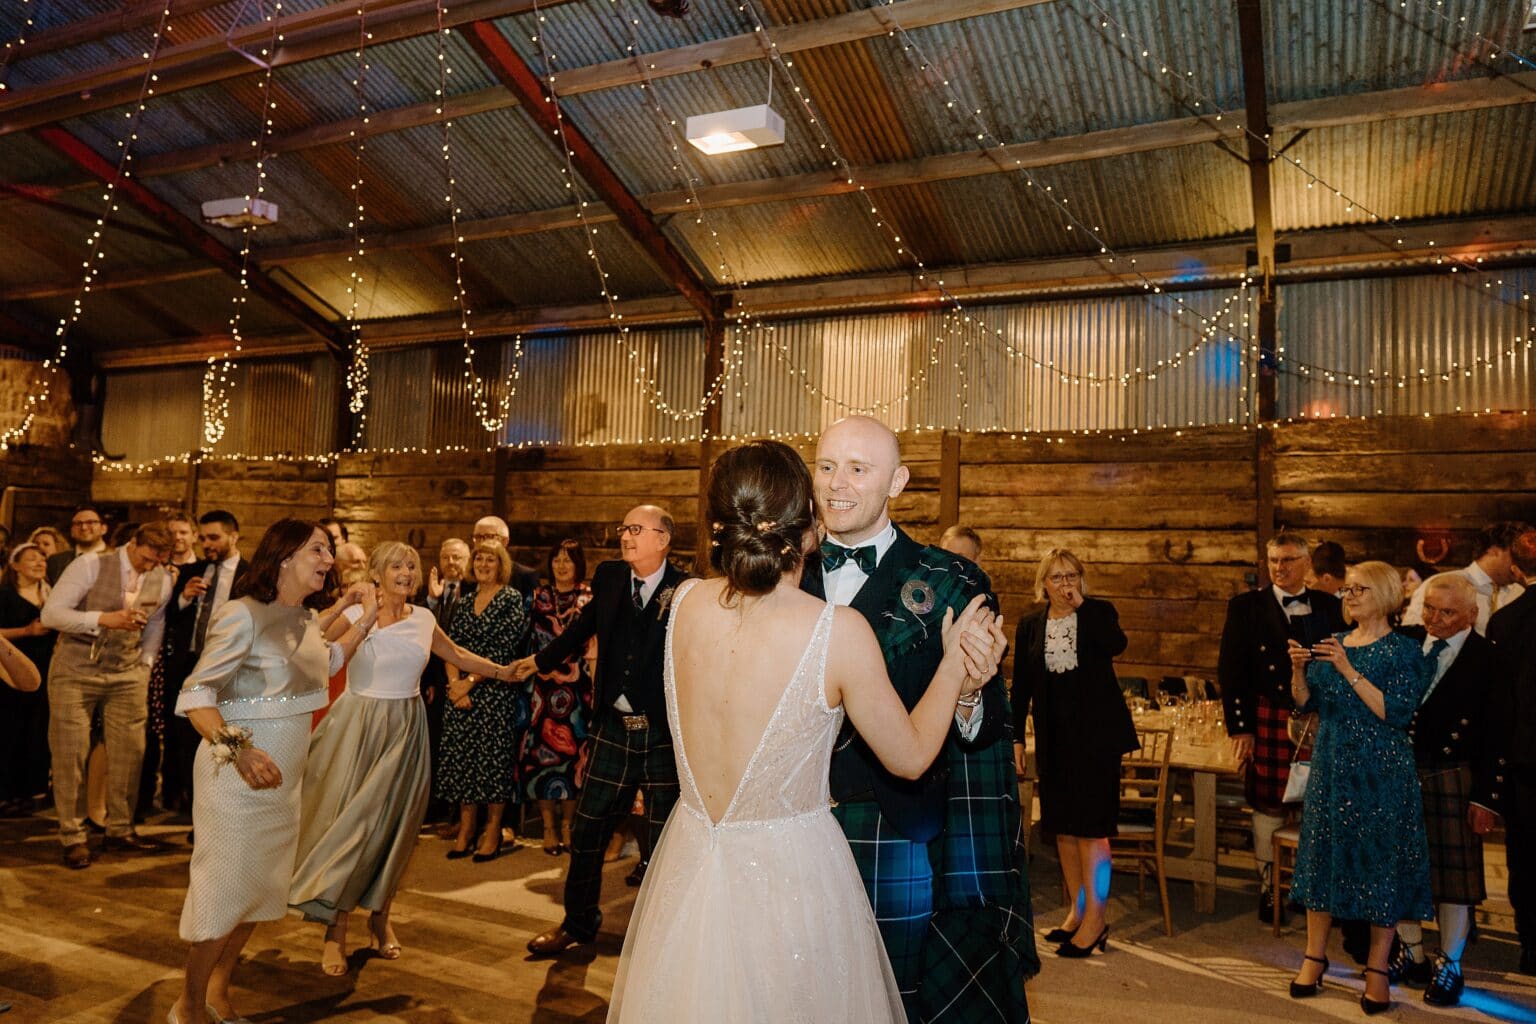 the bride and groom and guests dancing beneath festoon lighting at a wedding reception at a farm wedding venue near glasgow scotland